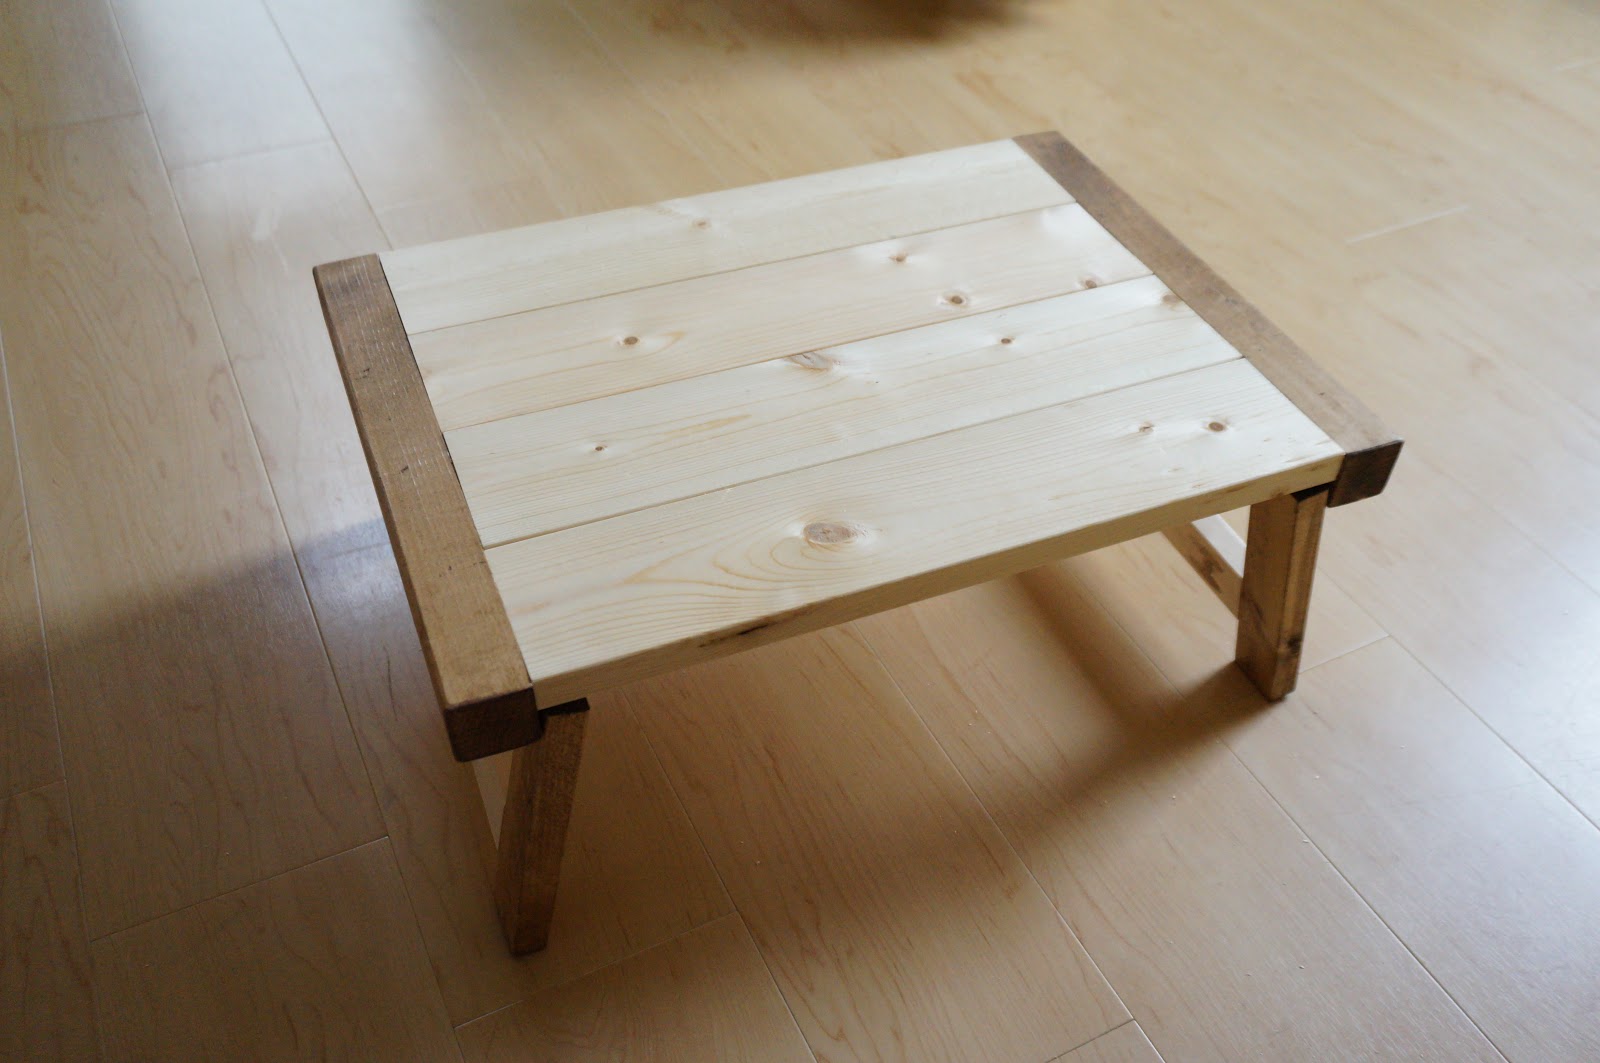 Something Good by DIY ： 手作りのステキな何か: 折りたたみ式ポータブルテーブル製作 ： いきなり完成写真公開！